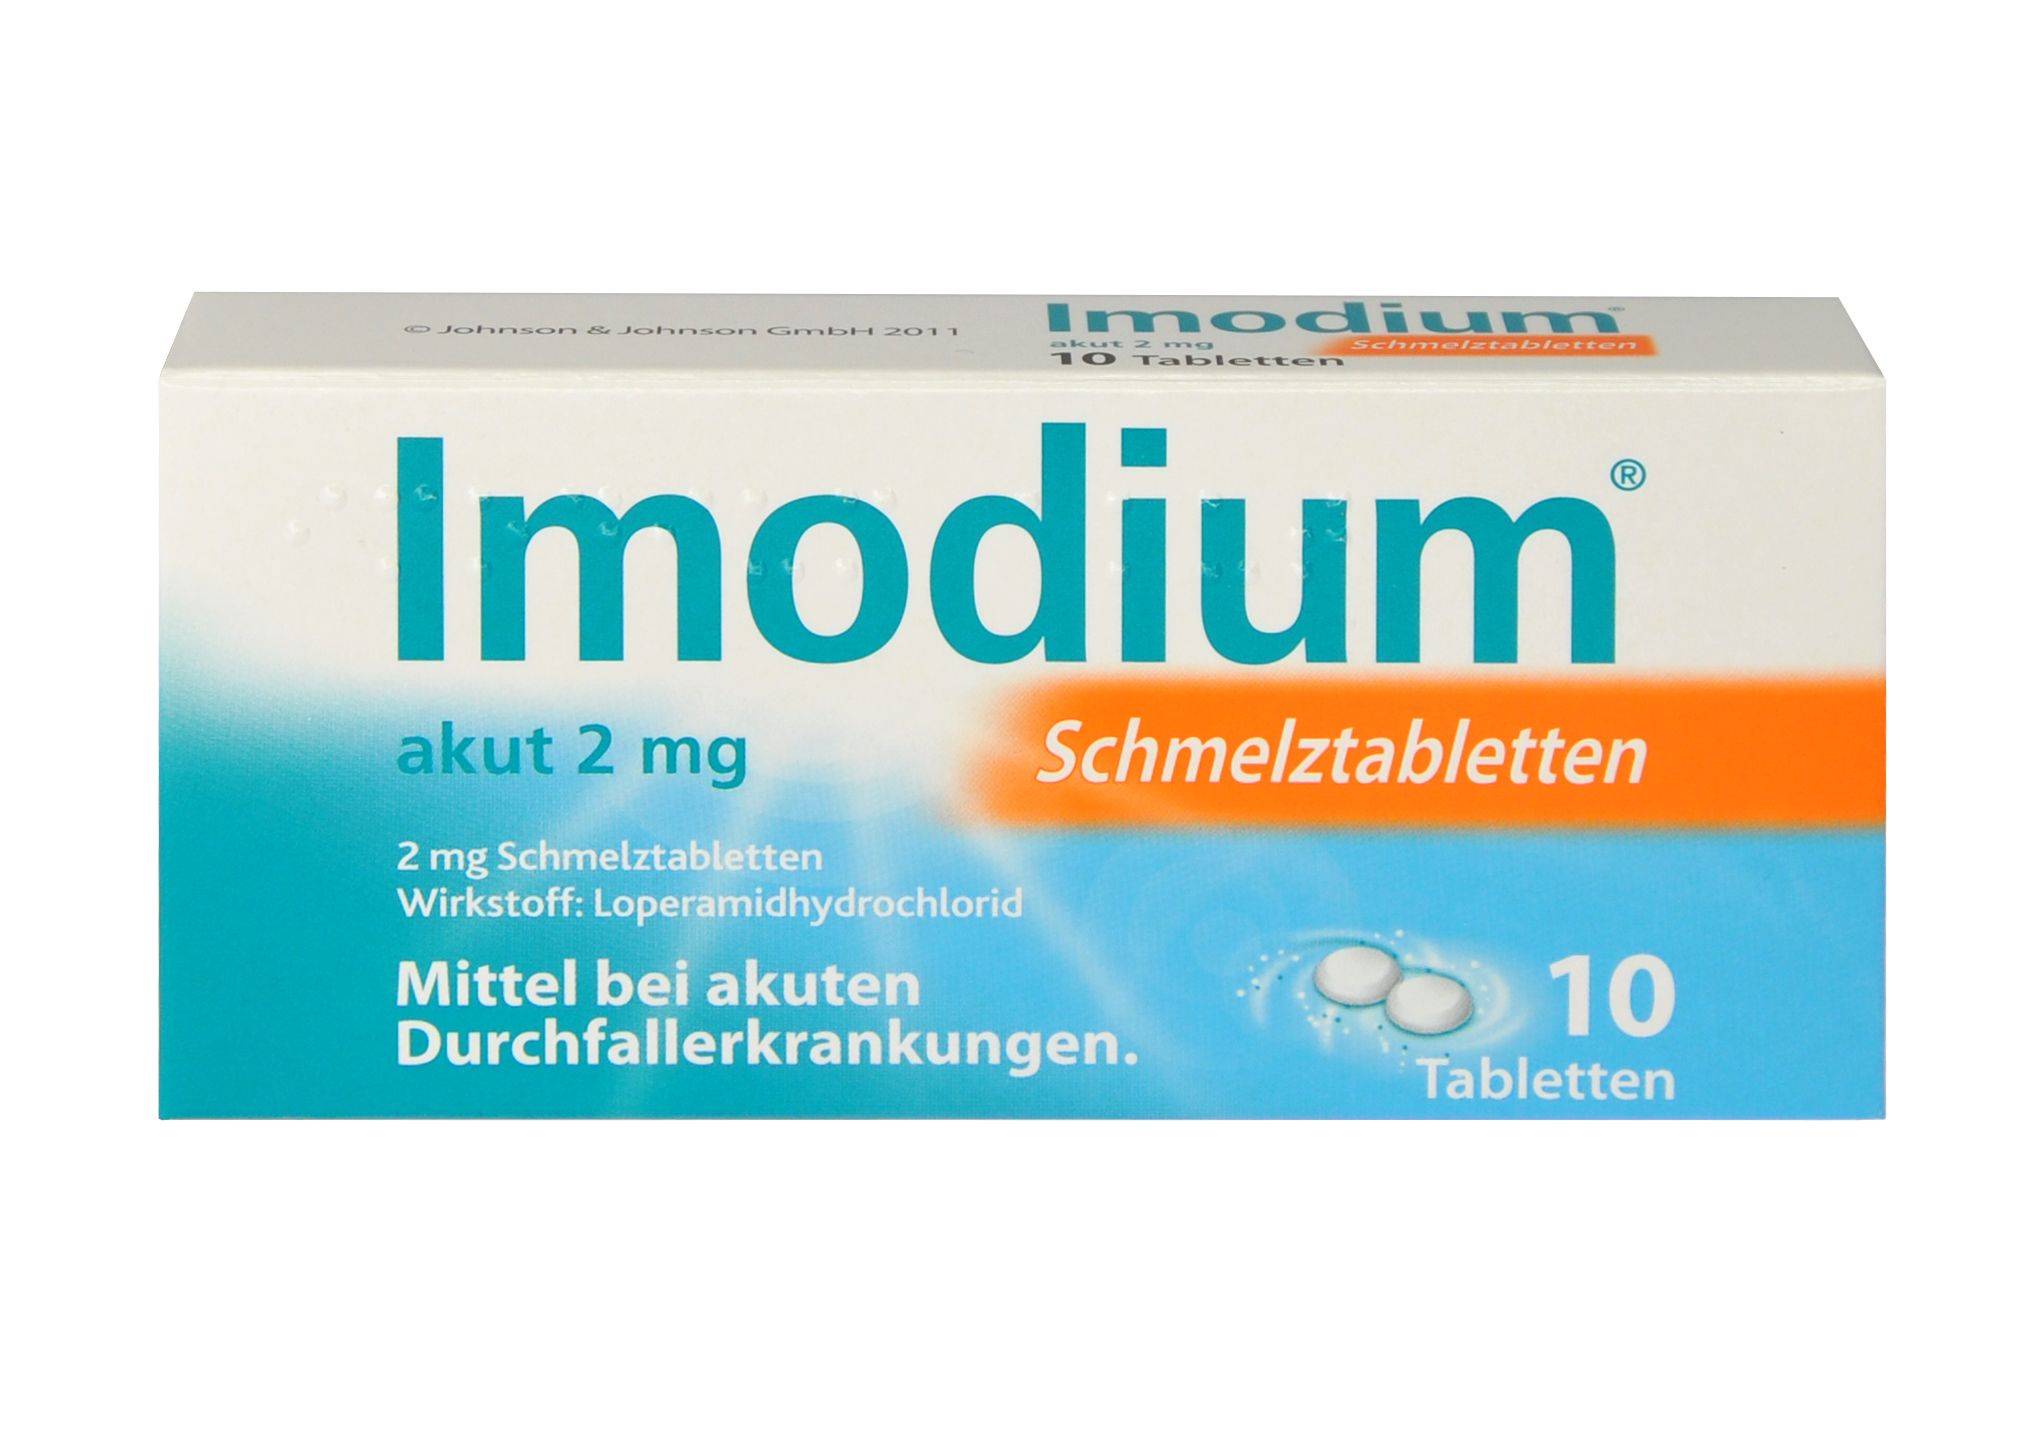 Image of Imodium akut 2mg Schmelztabletten